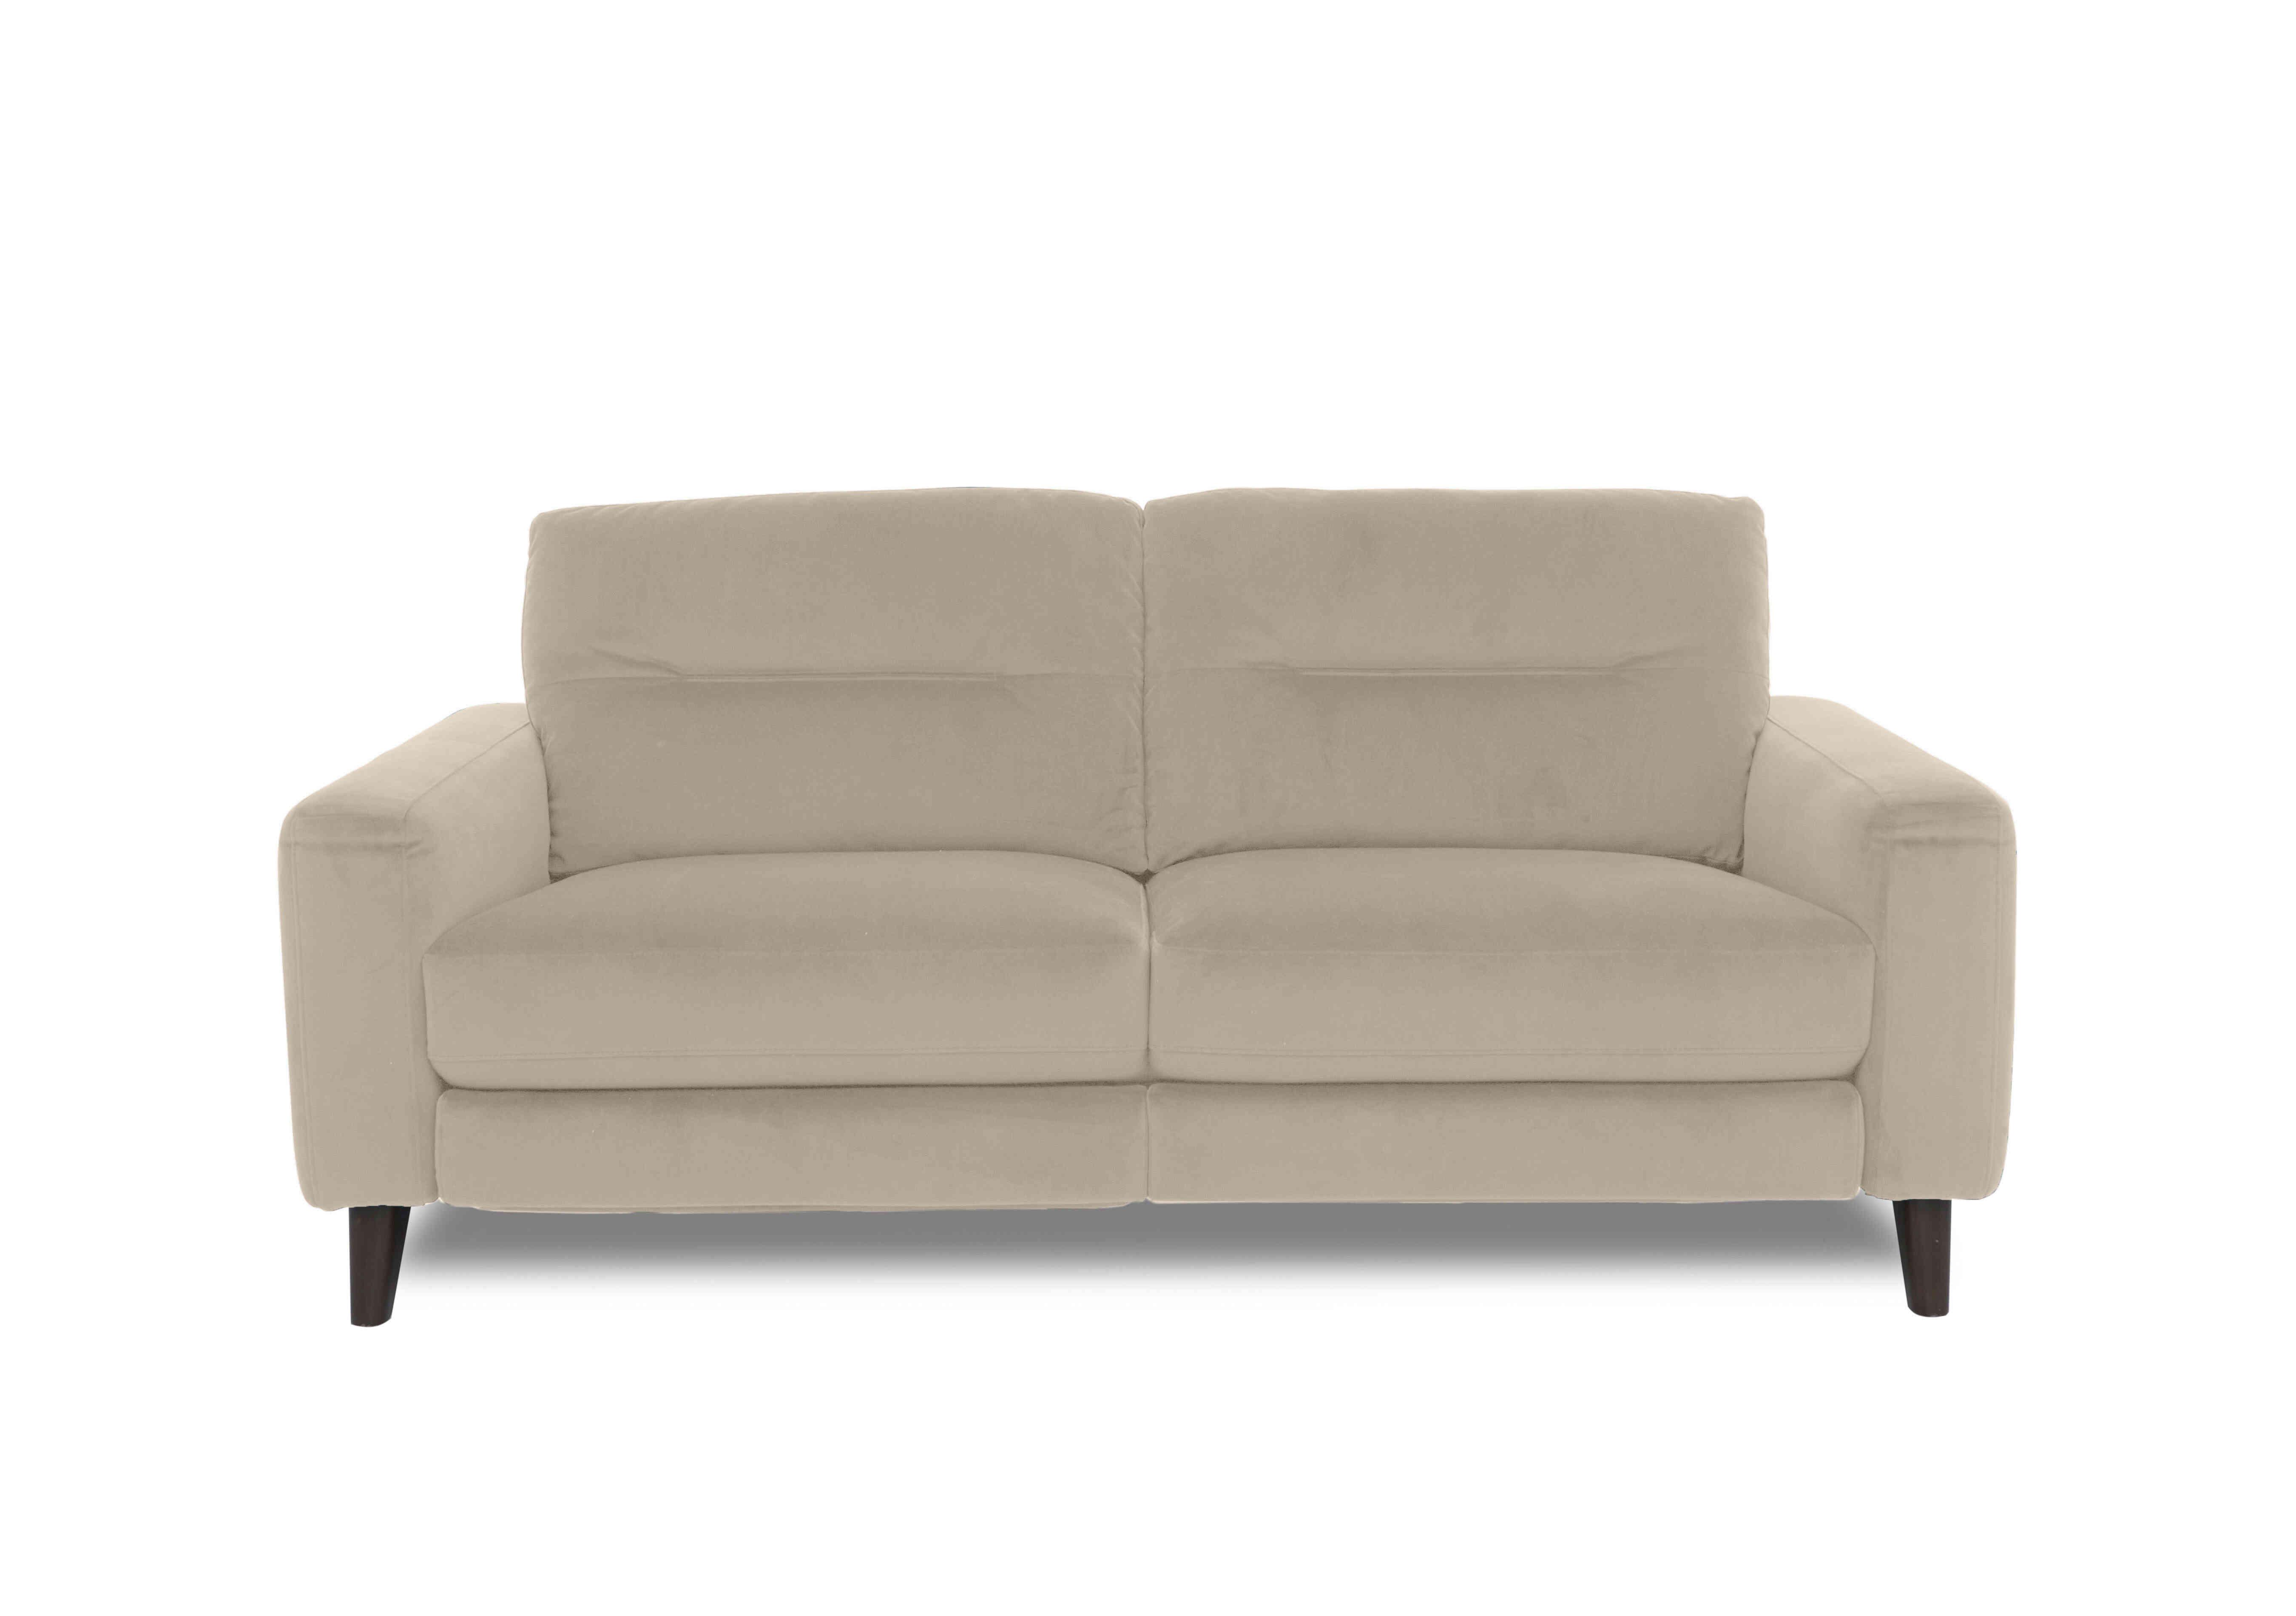 Jules 3 Seater Fabric Sofa in Fab-Meg-R32 Light Khaki on Furniture Village